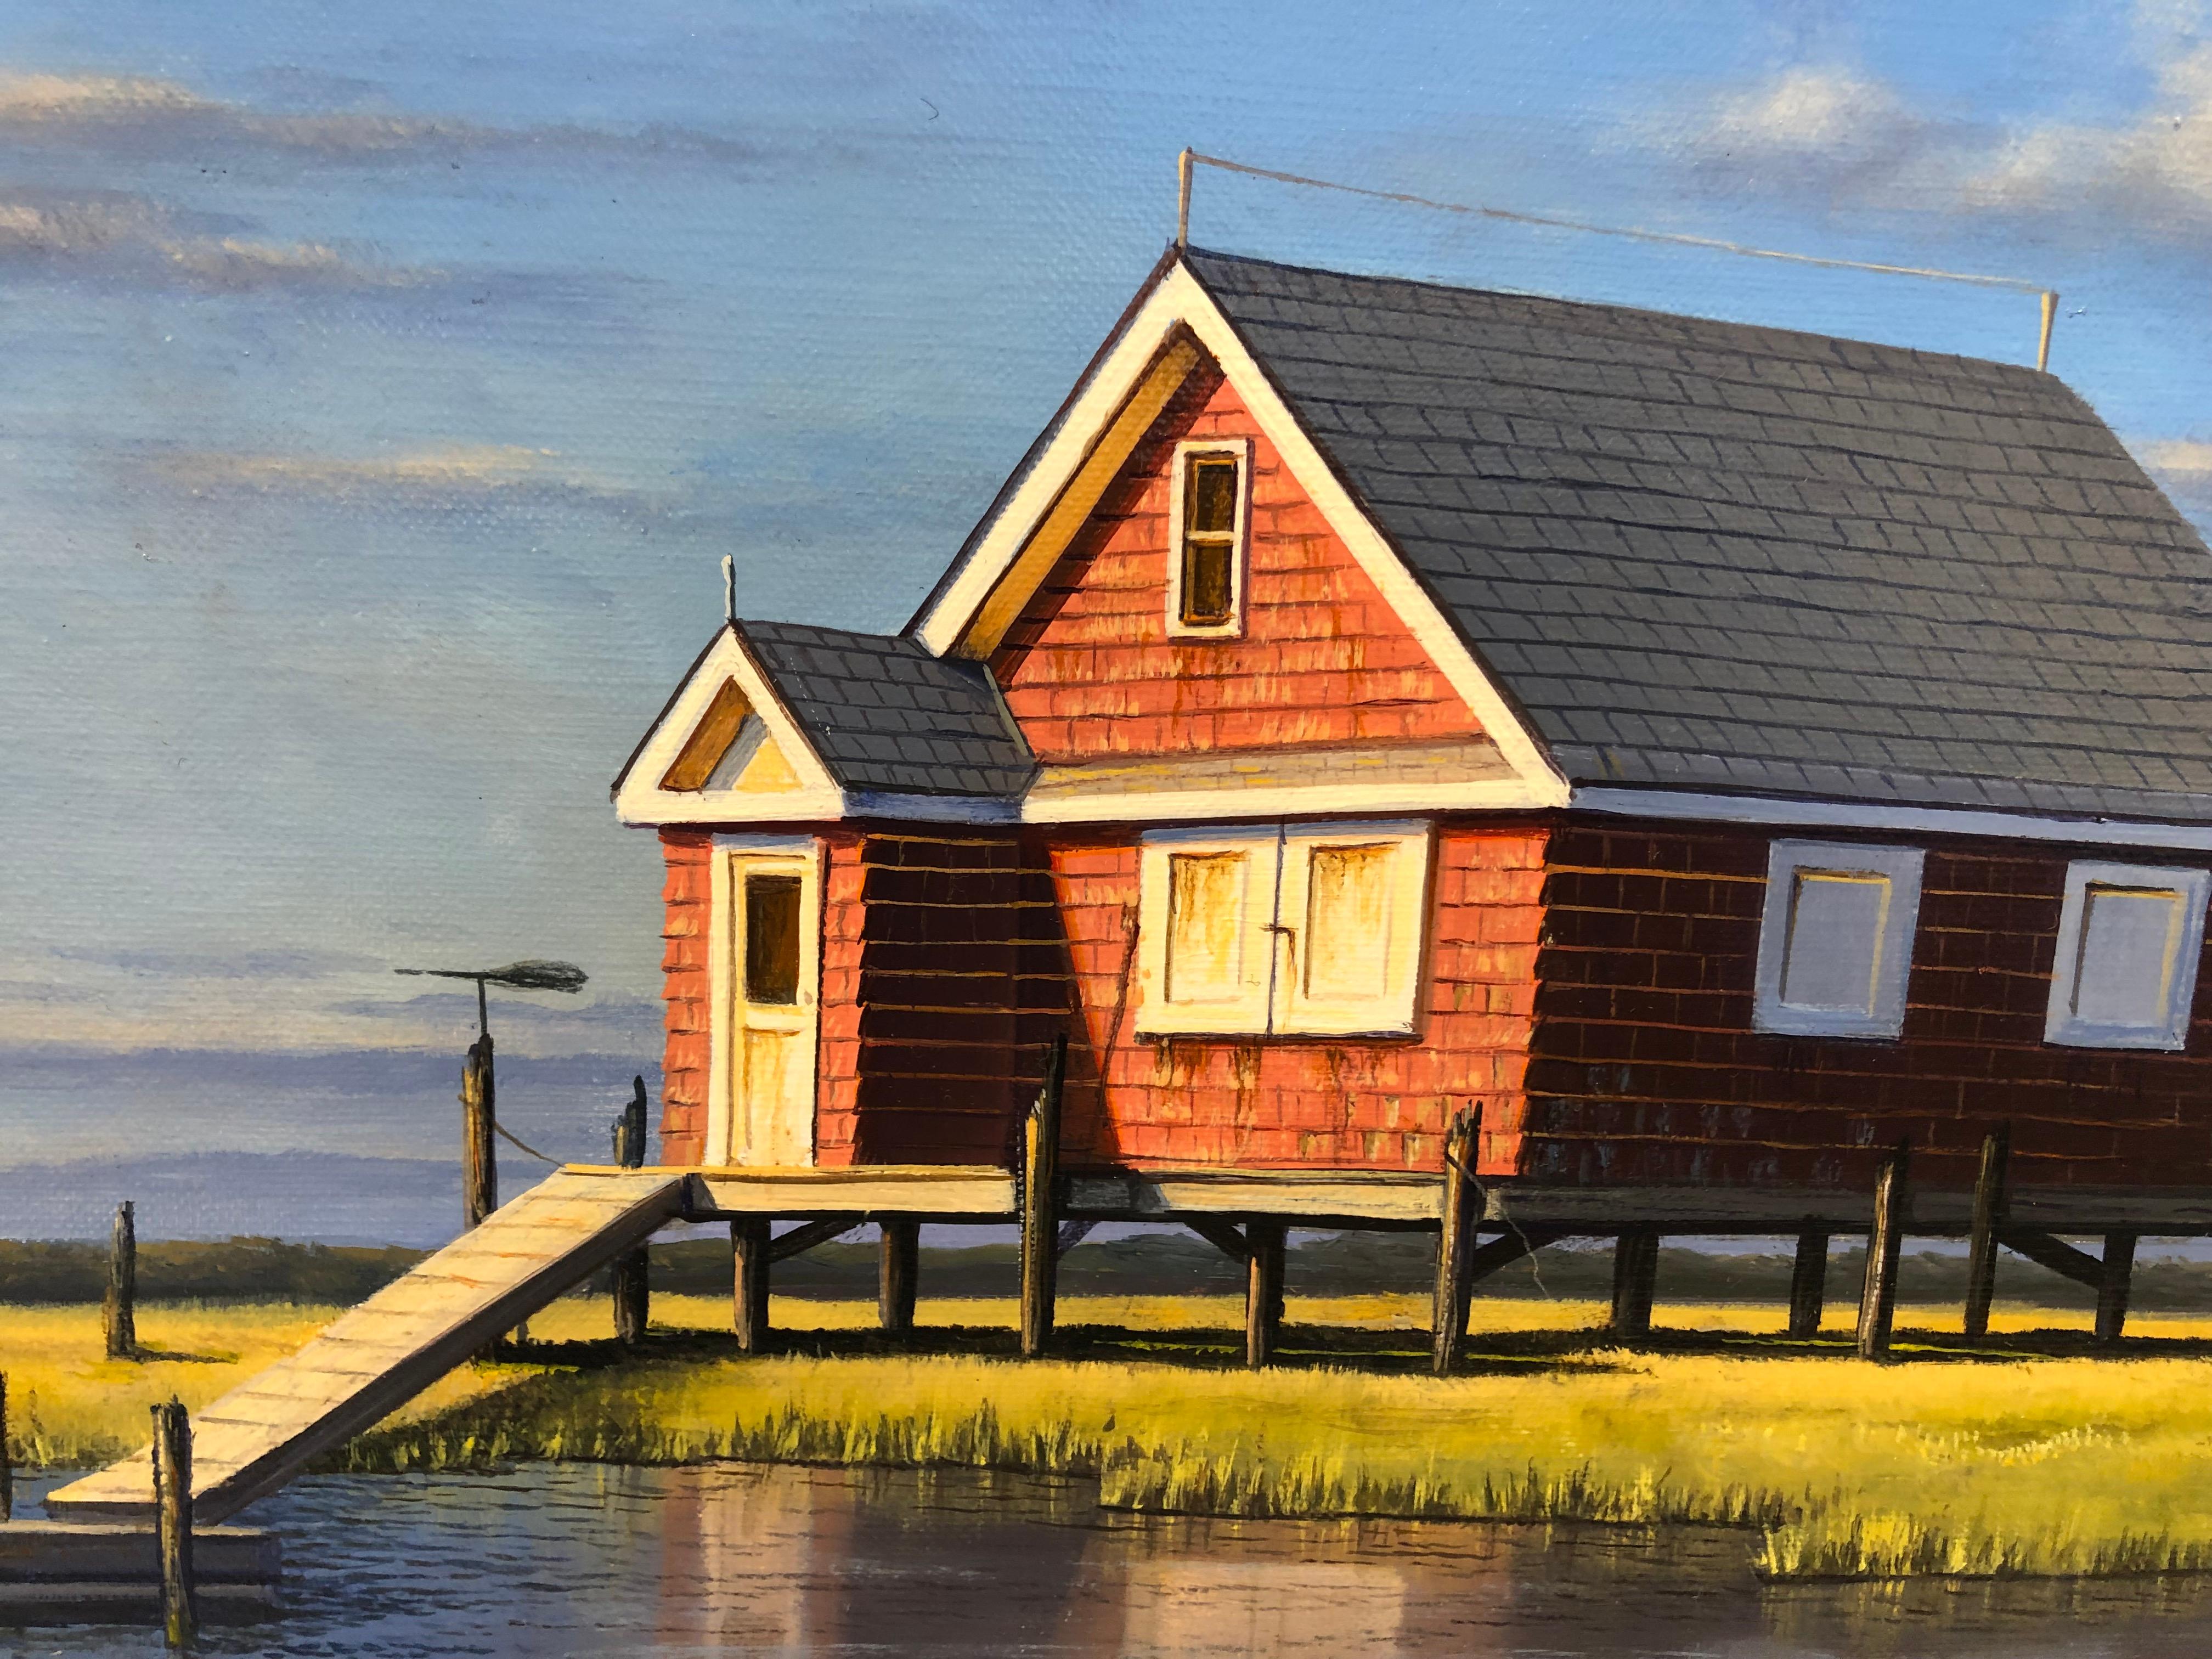 Seaman Bay House - American Realist Painting by Daniel Pollera